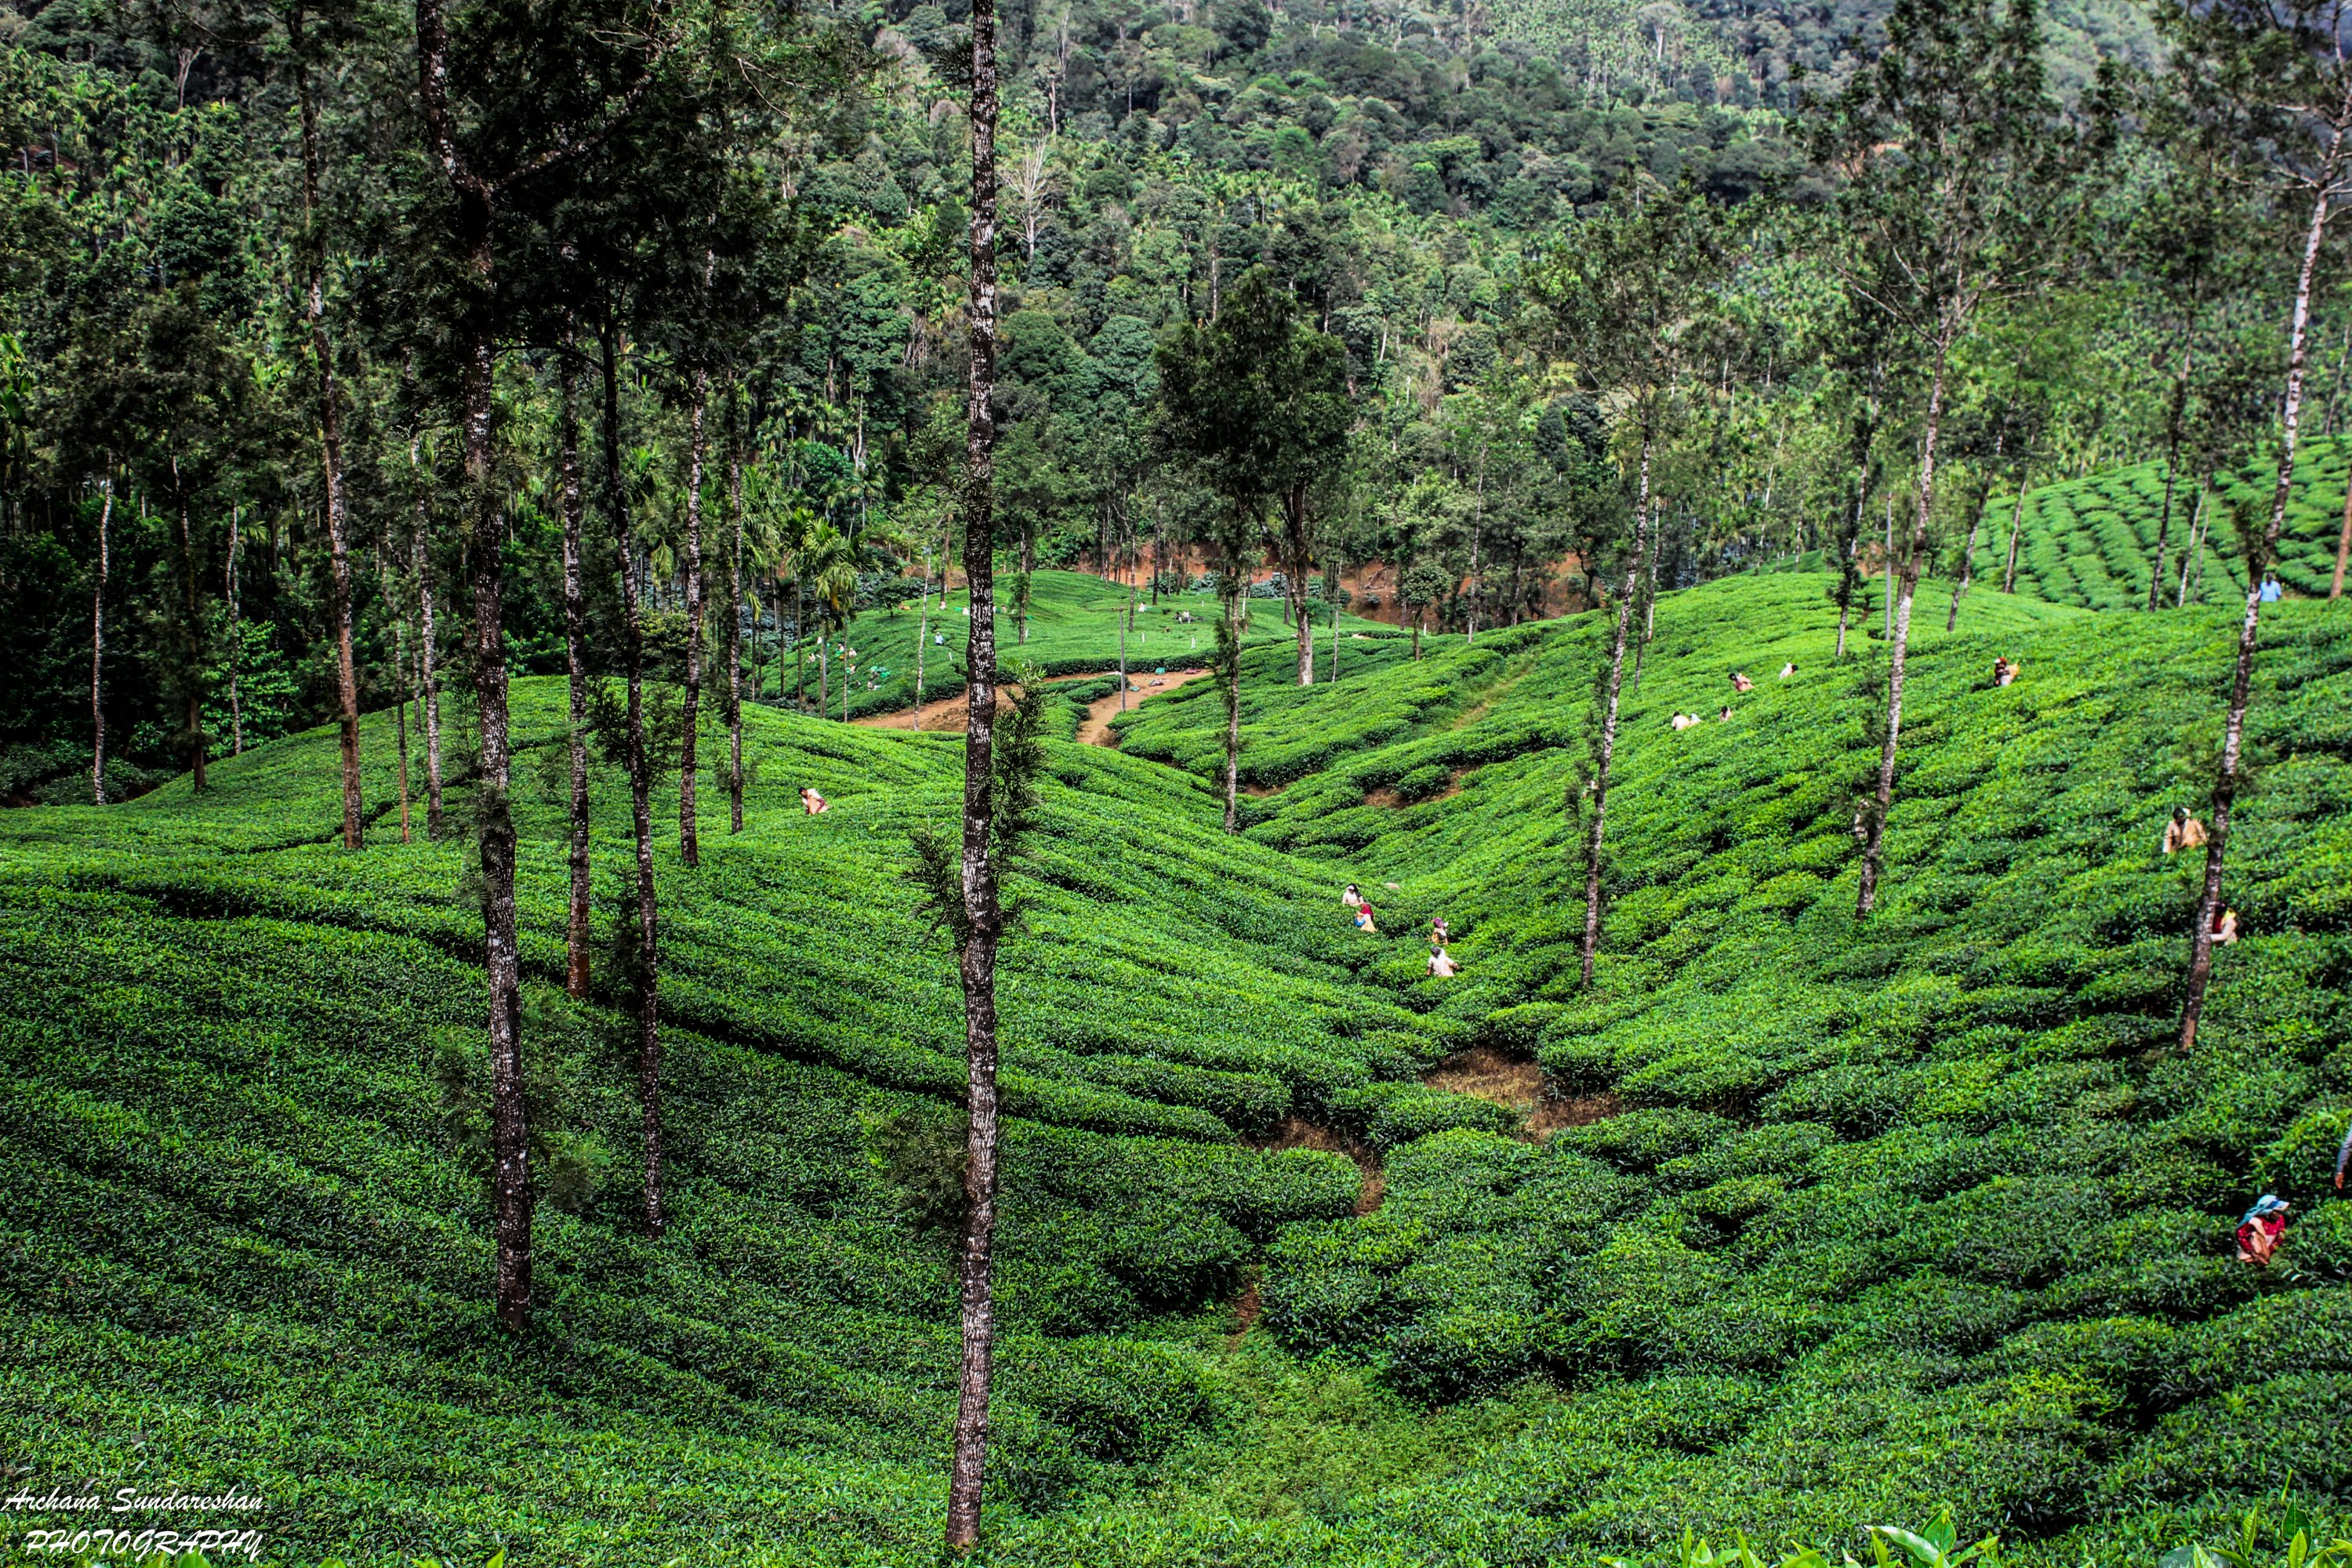 Malnad Tea plantations